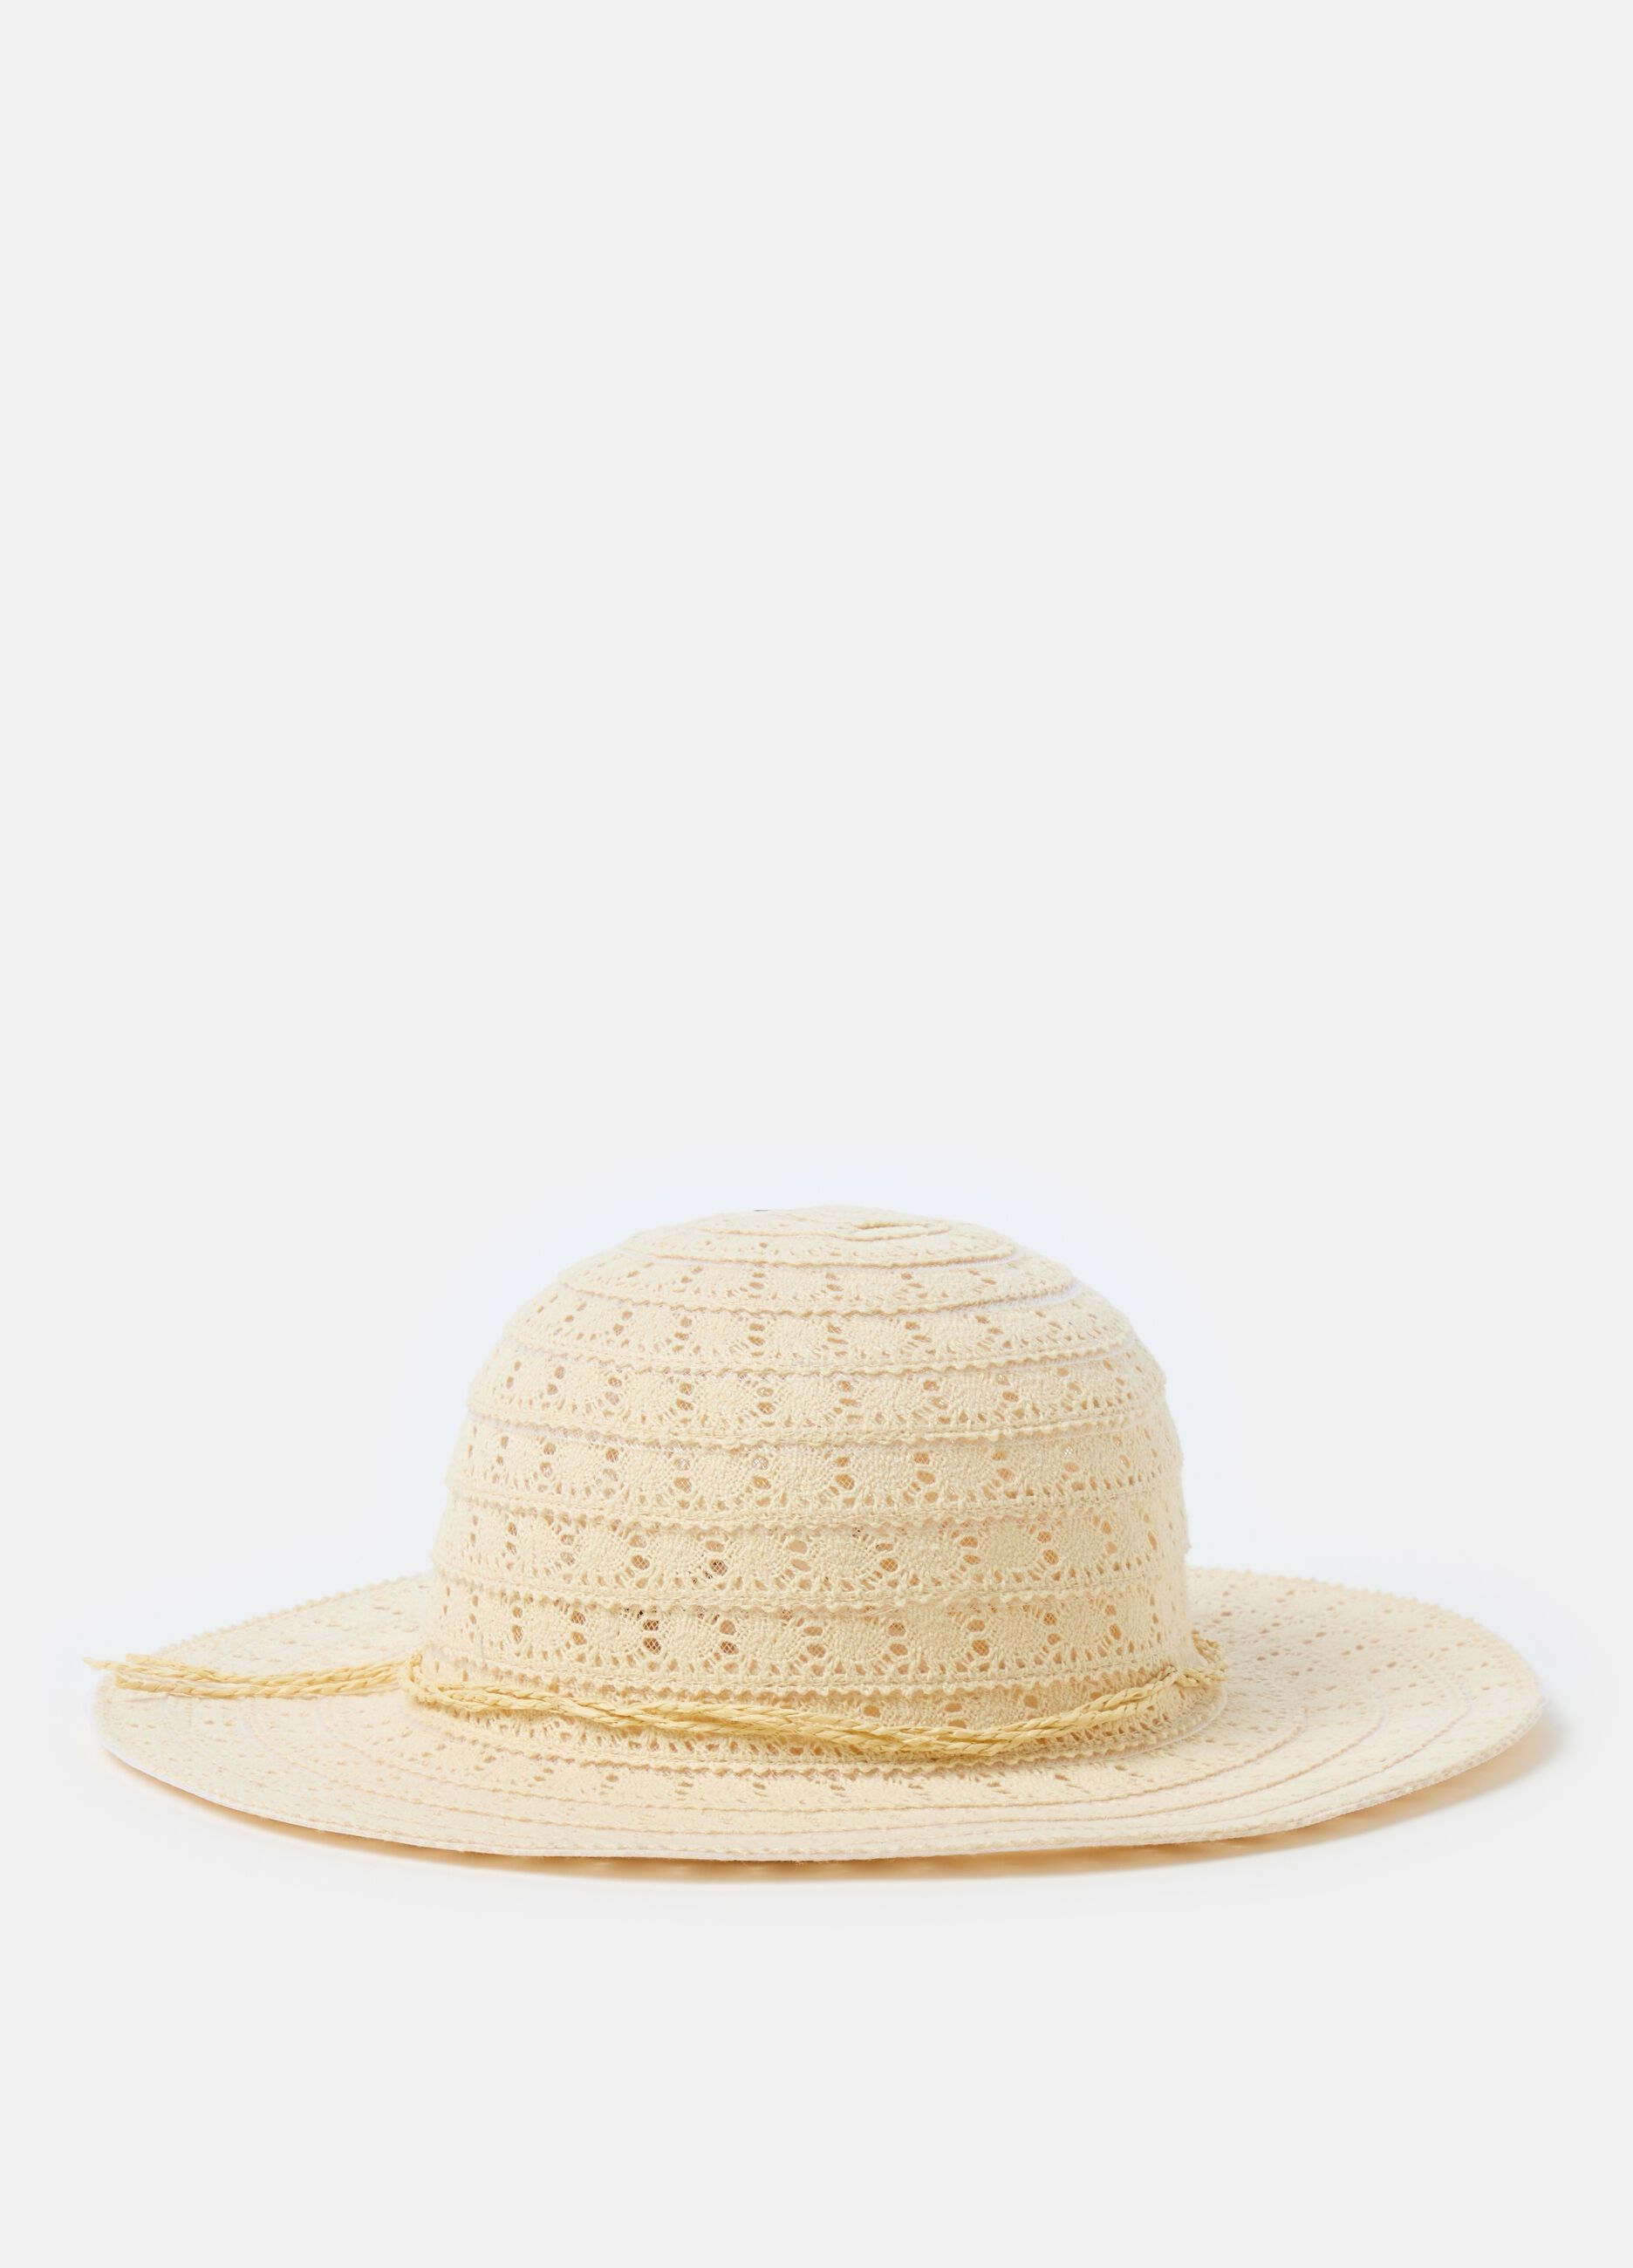 Hat with openwork design